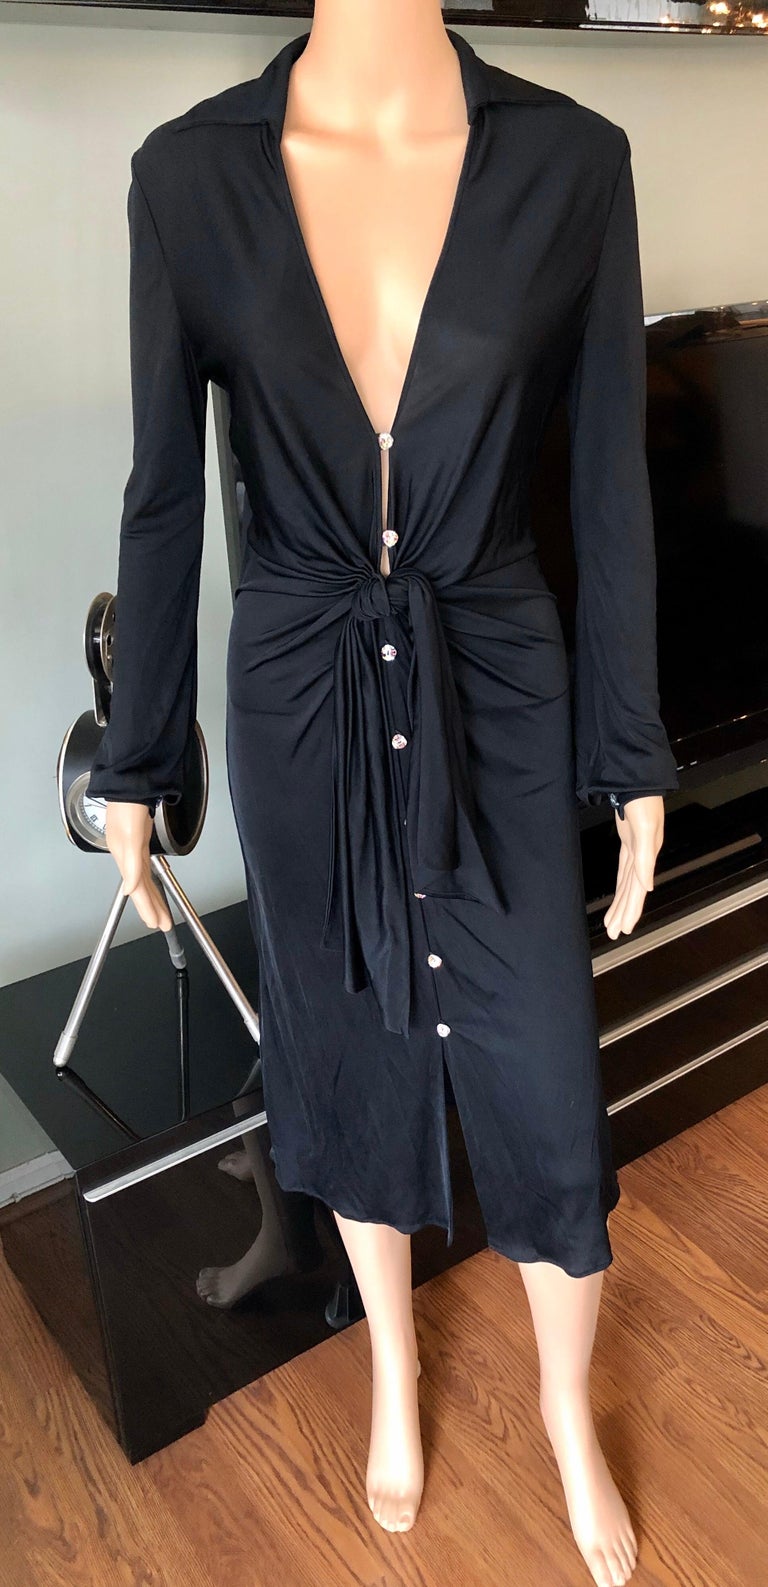 Gianni Versace S/S 2000 Runway Vintage Plunging Neckline Black Dress  For Sale 4